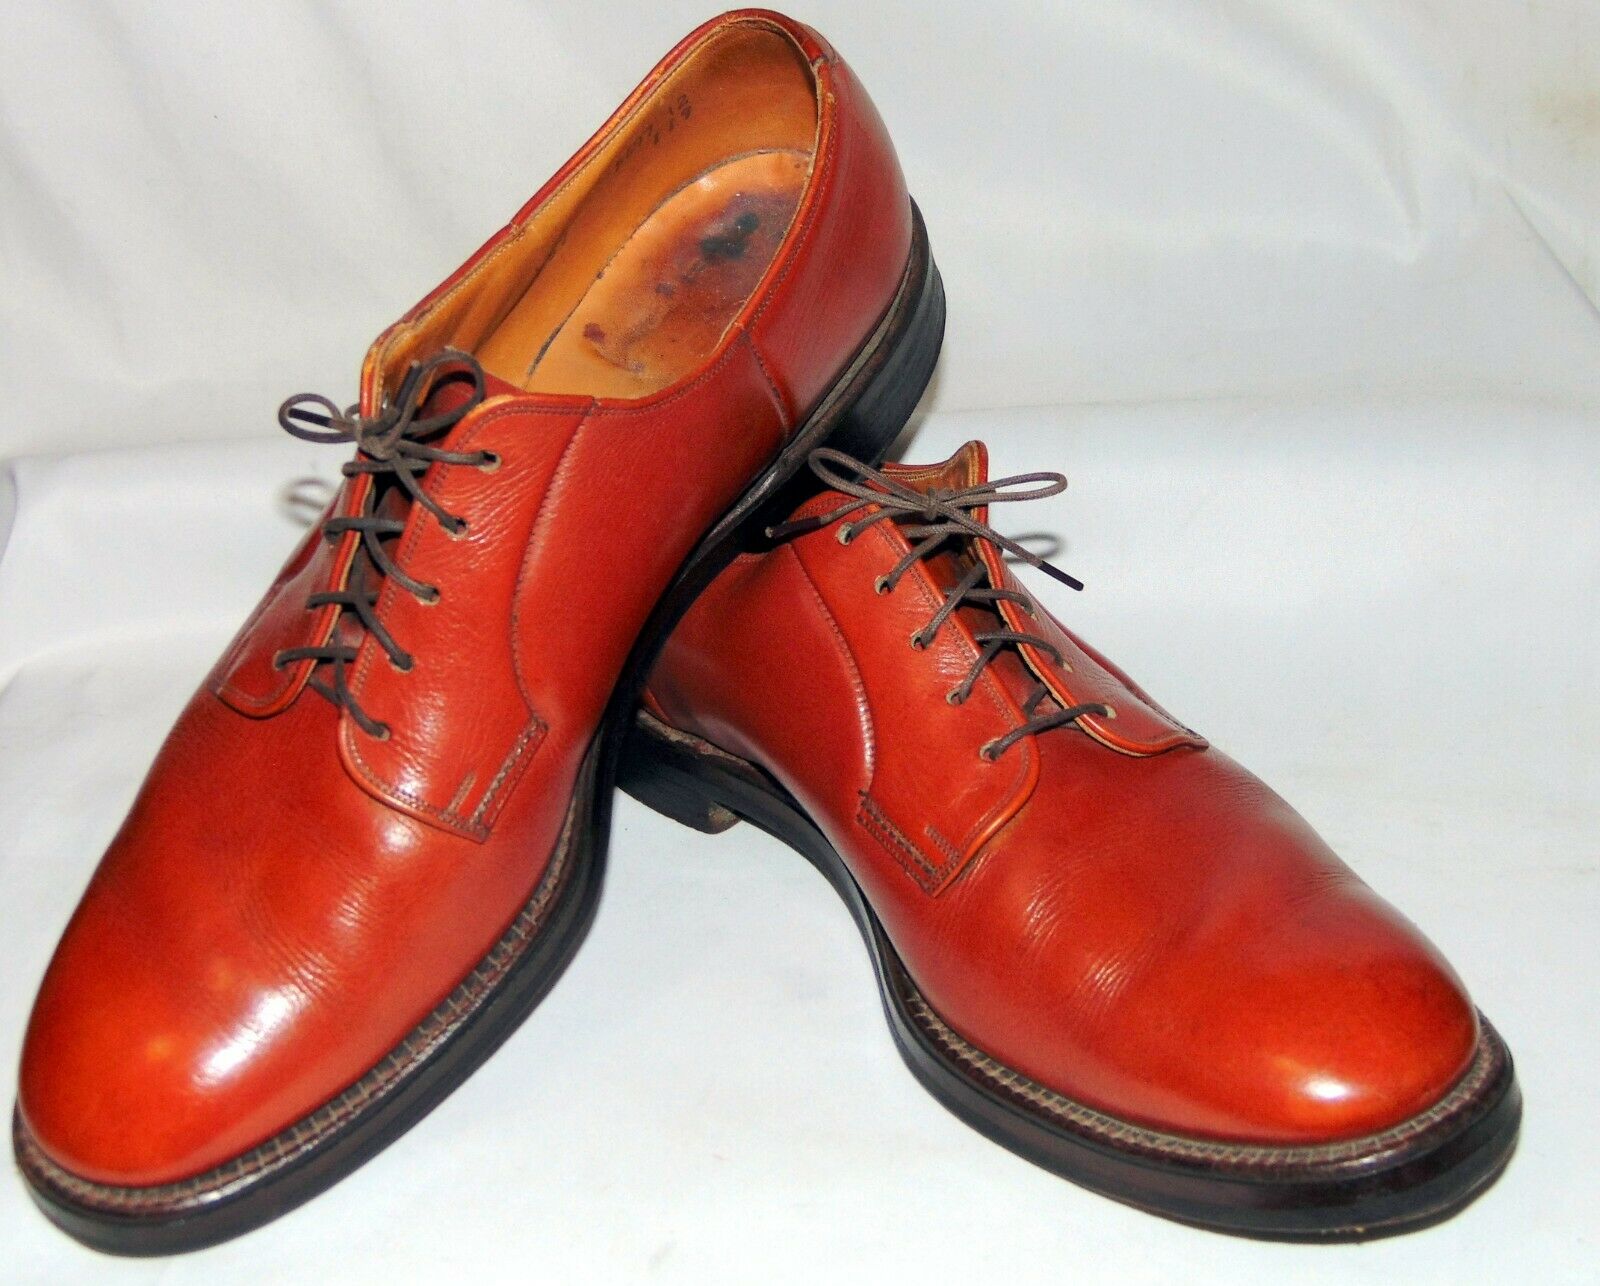 Boyds Threadneedle Street Dress Shoes - Size 11.5 D - Rare Vintage Very Nice!